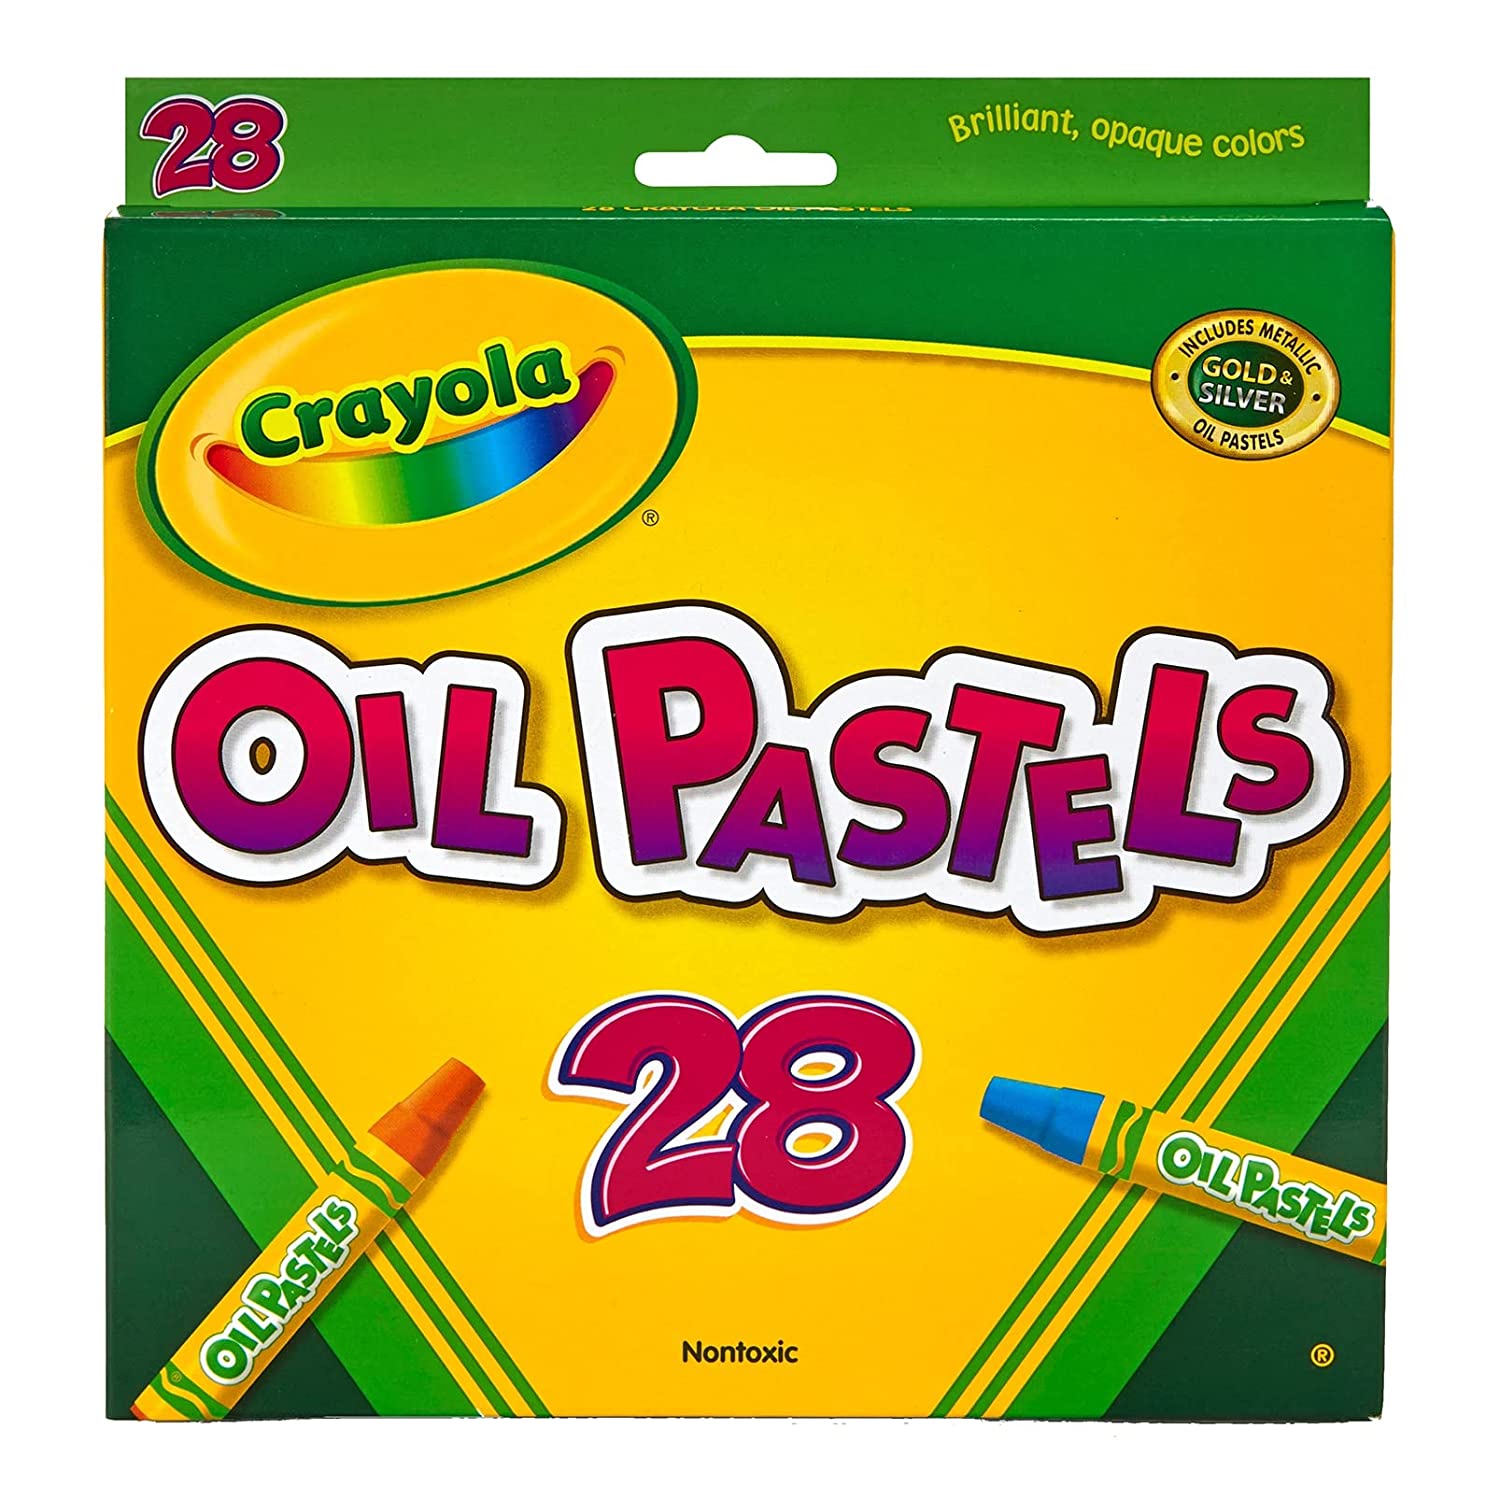 Crayola Colored Oil Pastel Sticks